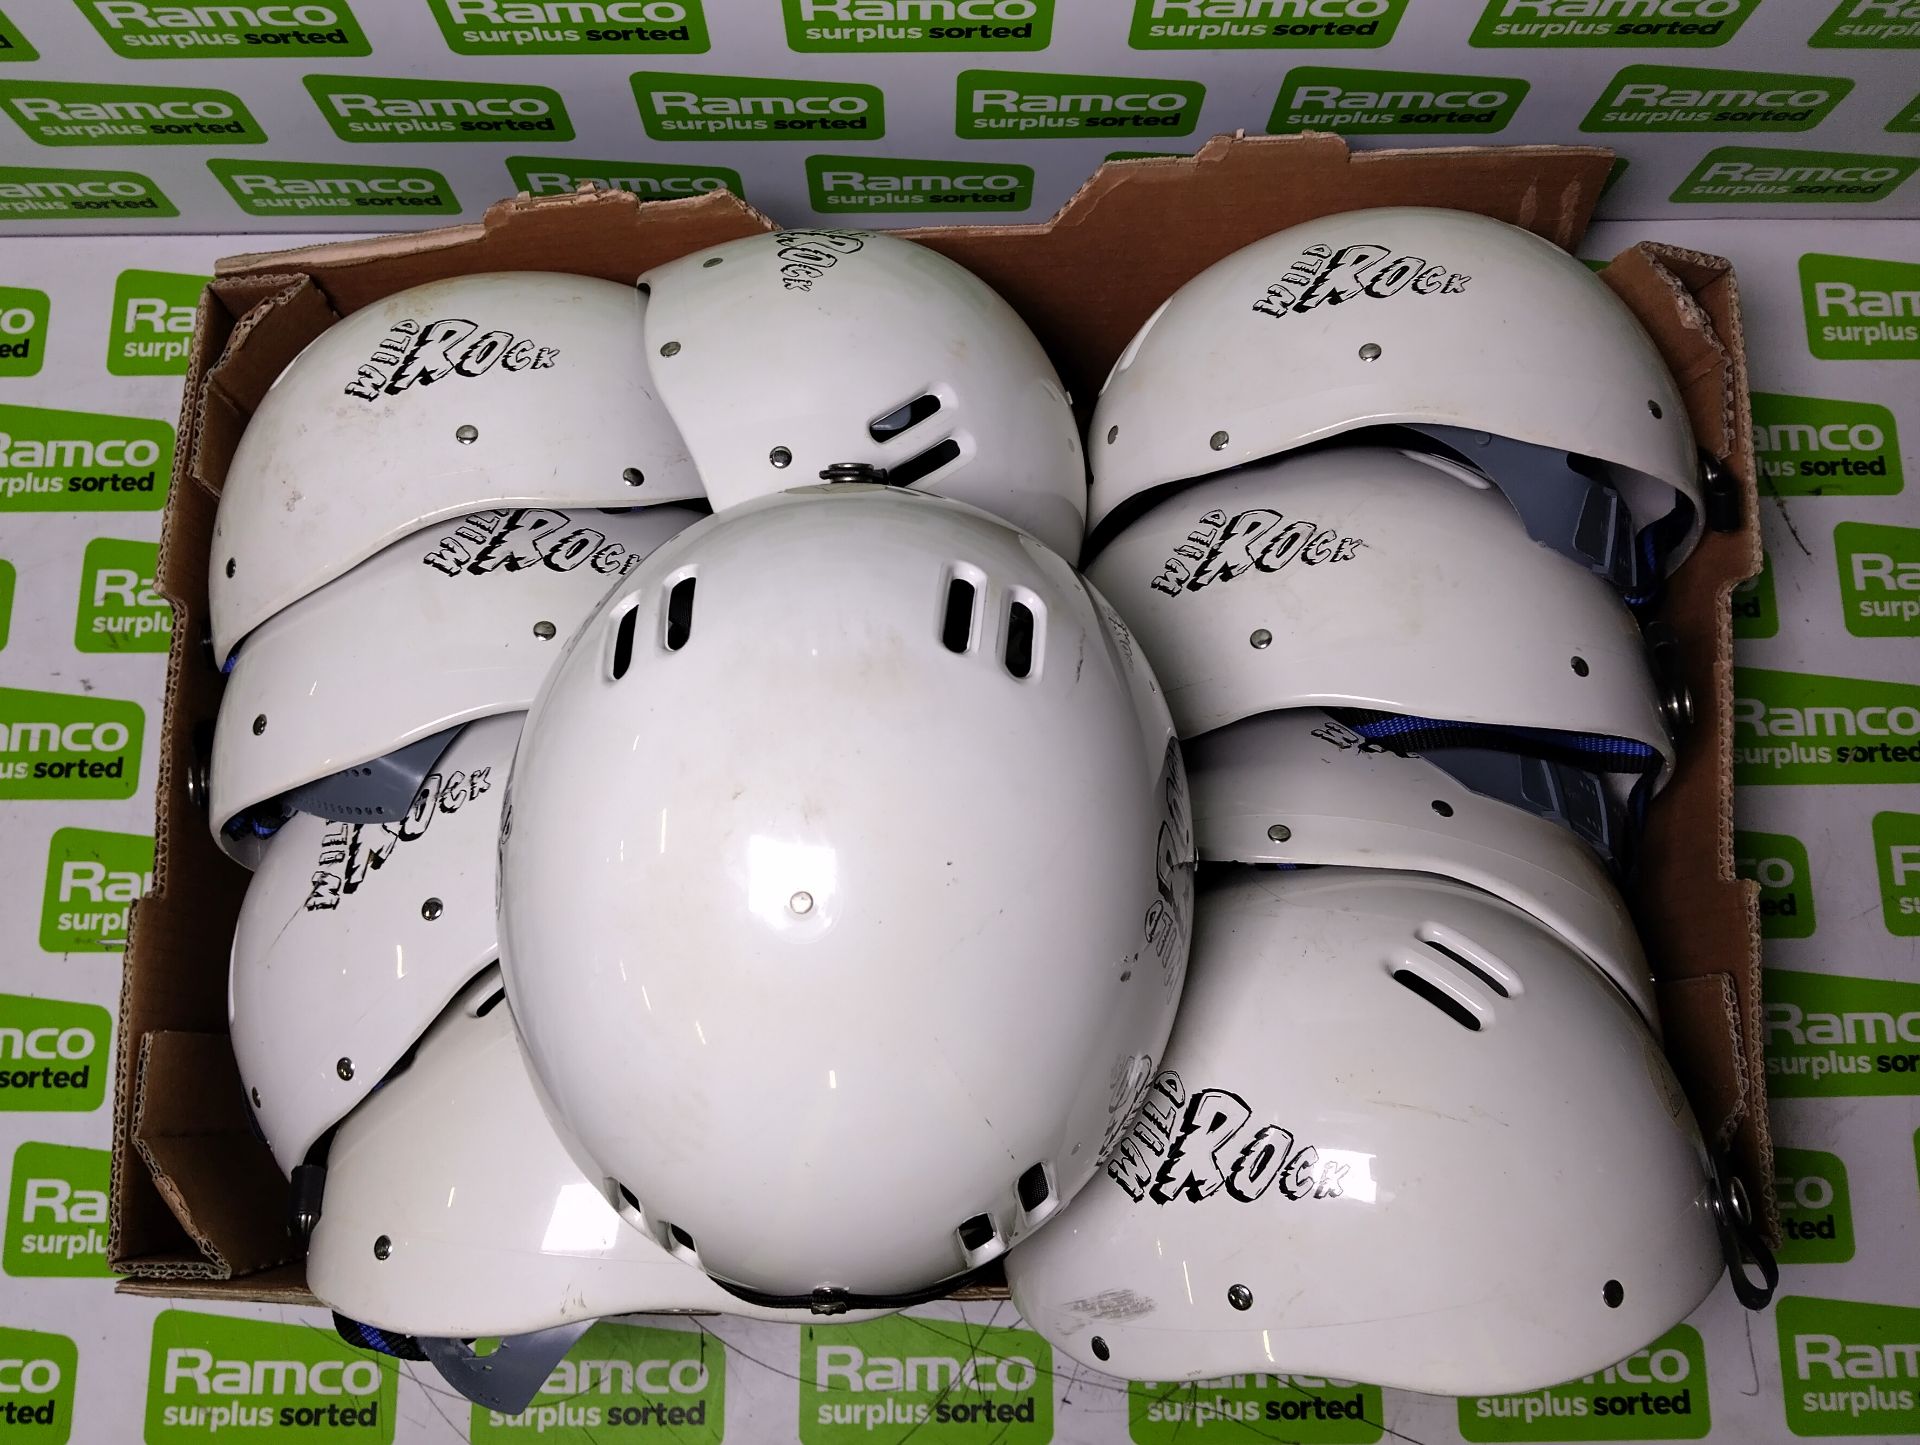 10x Wild Rock helmets - white - size: 51-62cm - Image 2 of 4